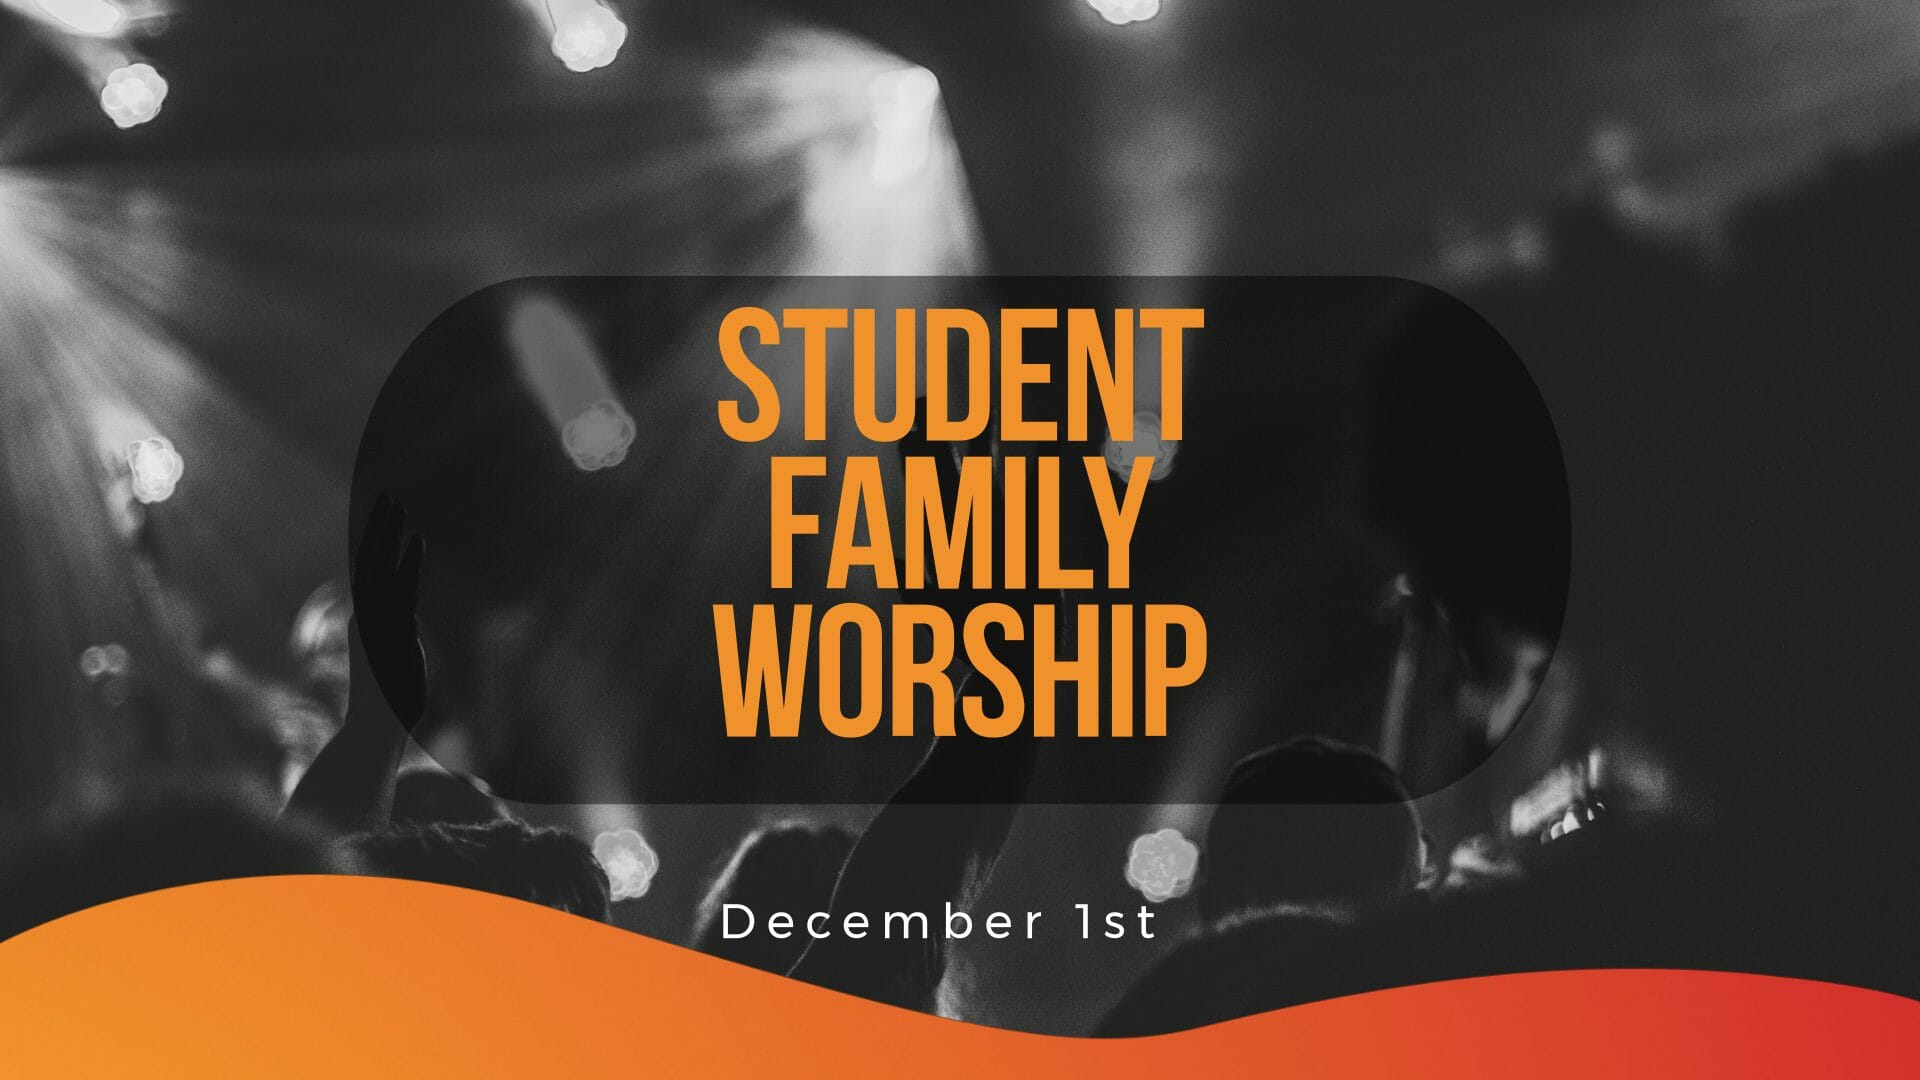 STUDENT FAMILY WORSHIP